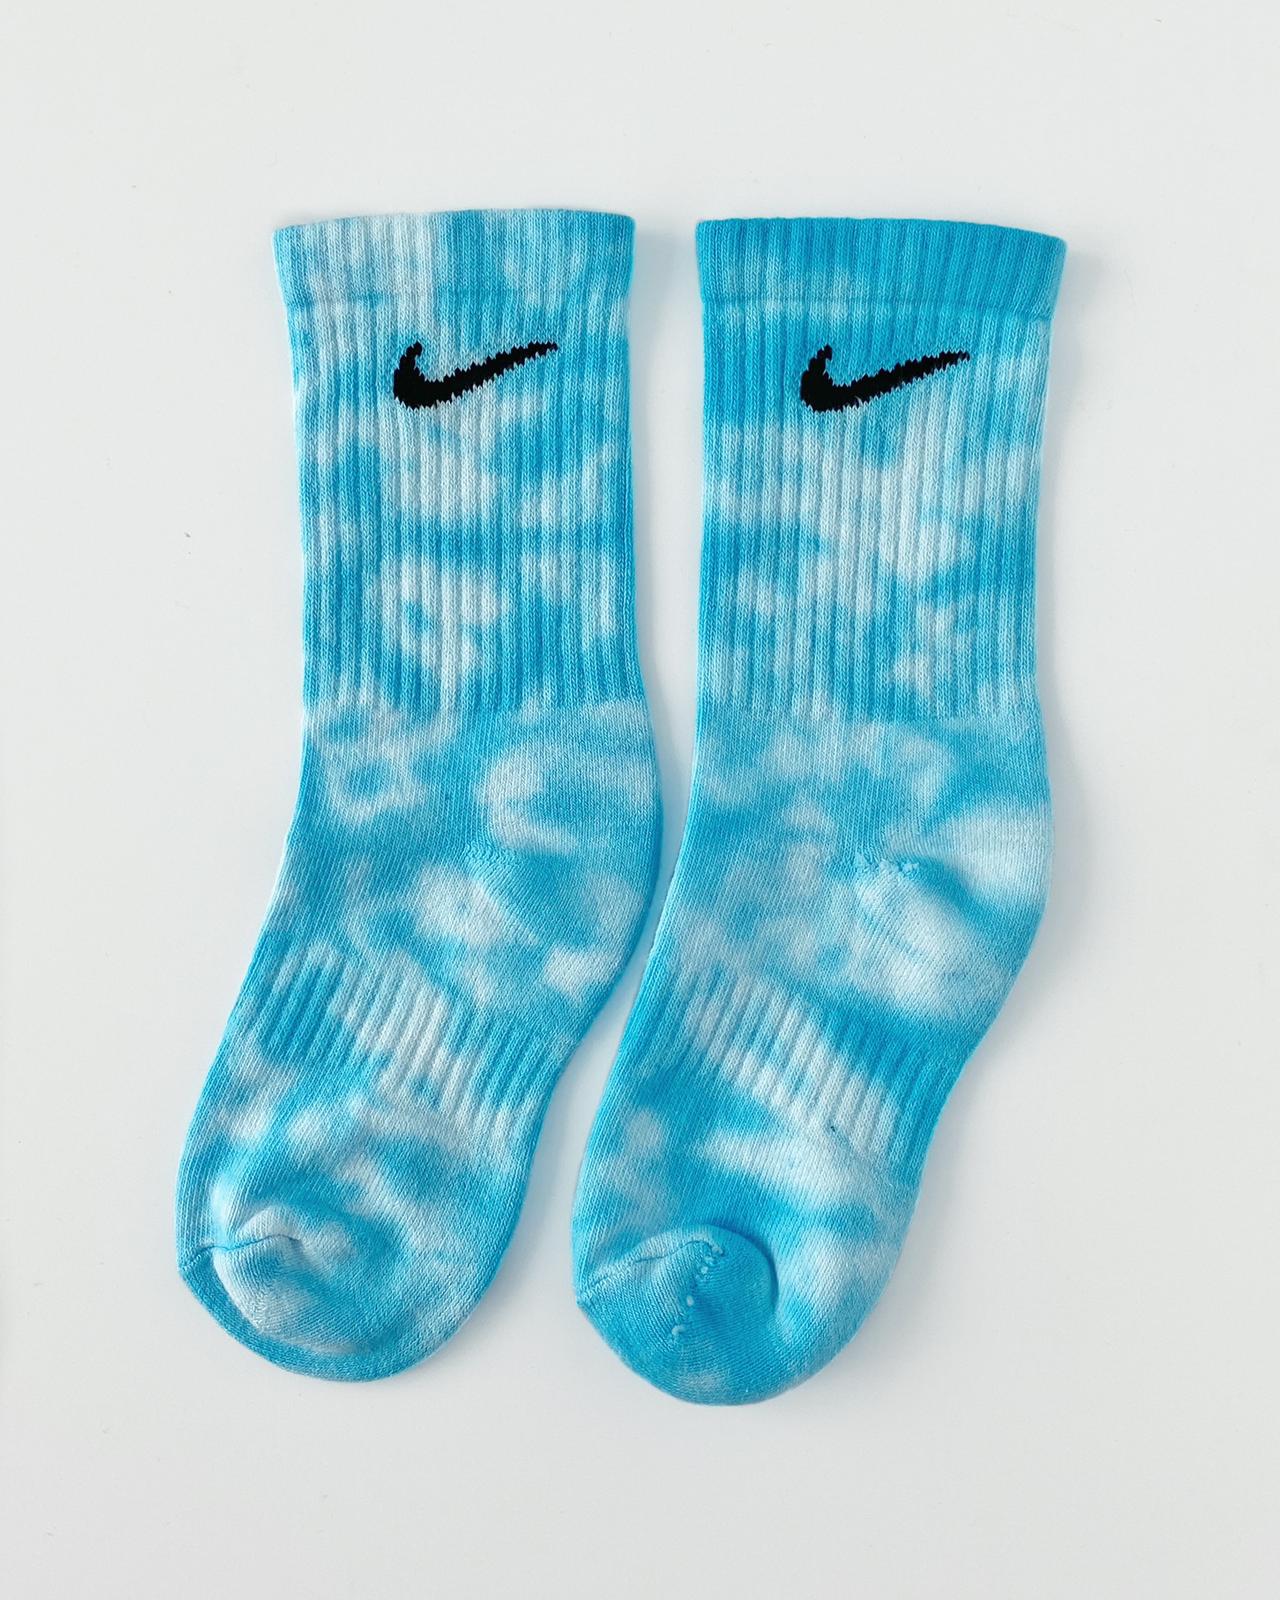 Calcetines Nike tie dye Sky reto  novo. Calcetines Nike 100% originales teñidos a mano. Shop NOW! - Colour Trip